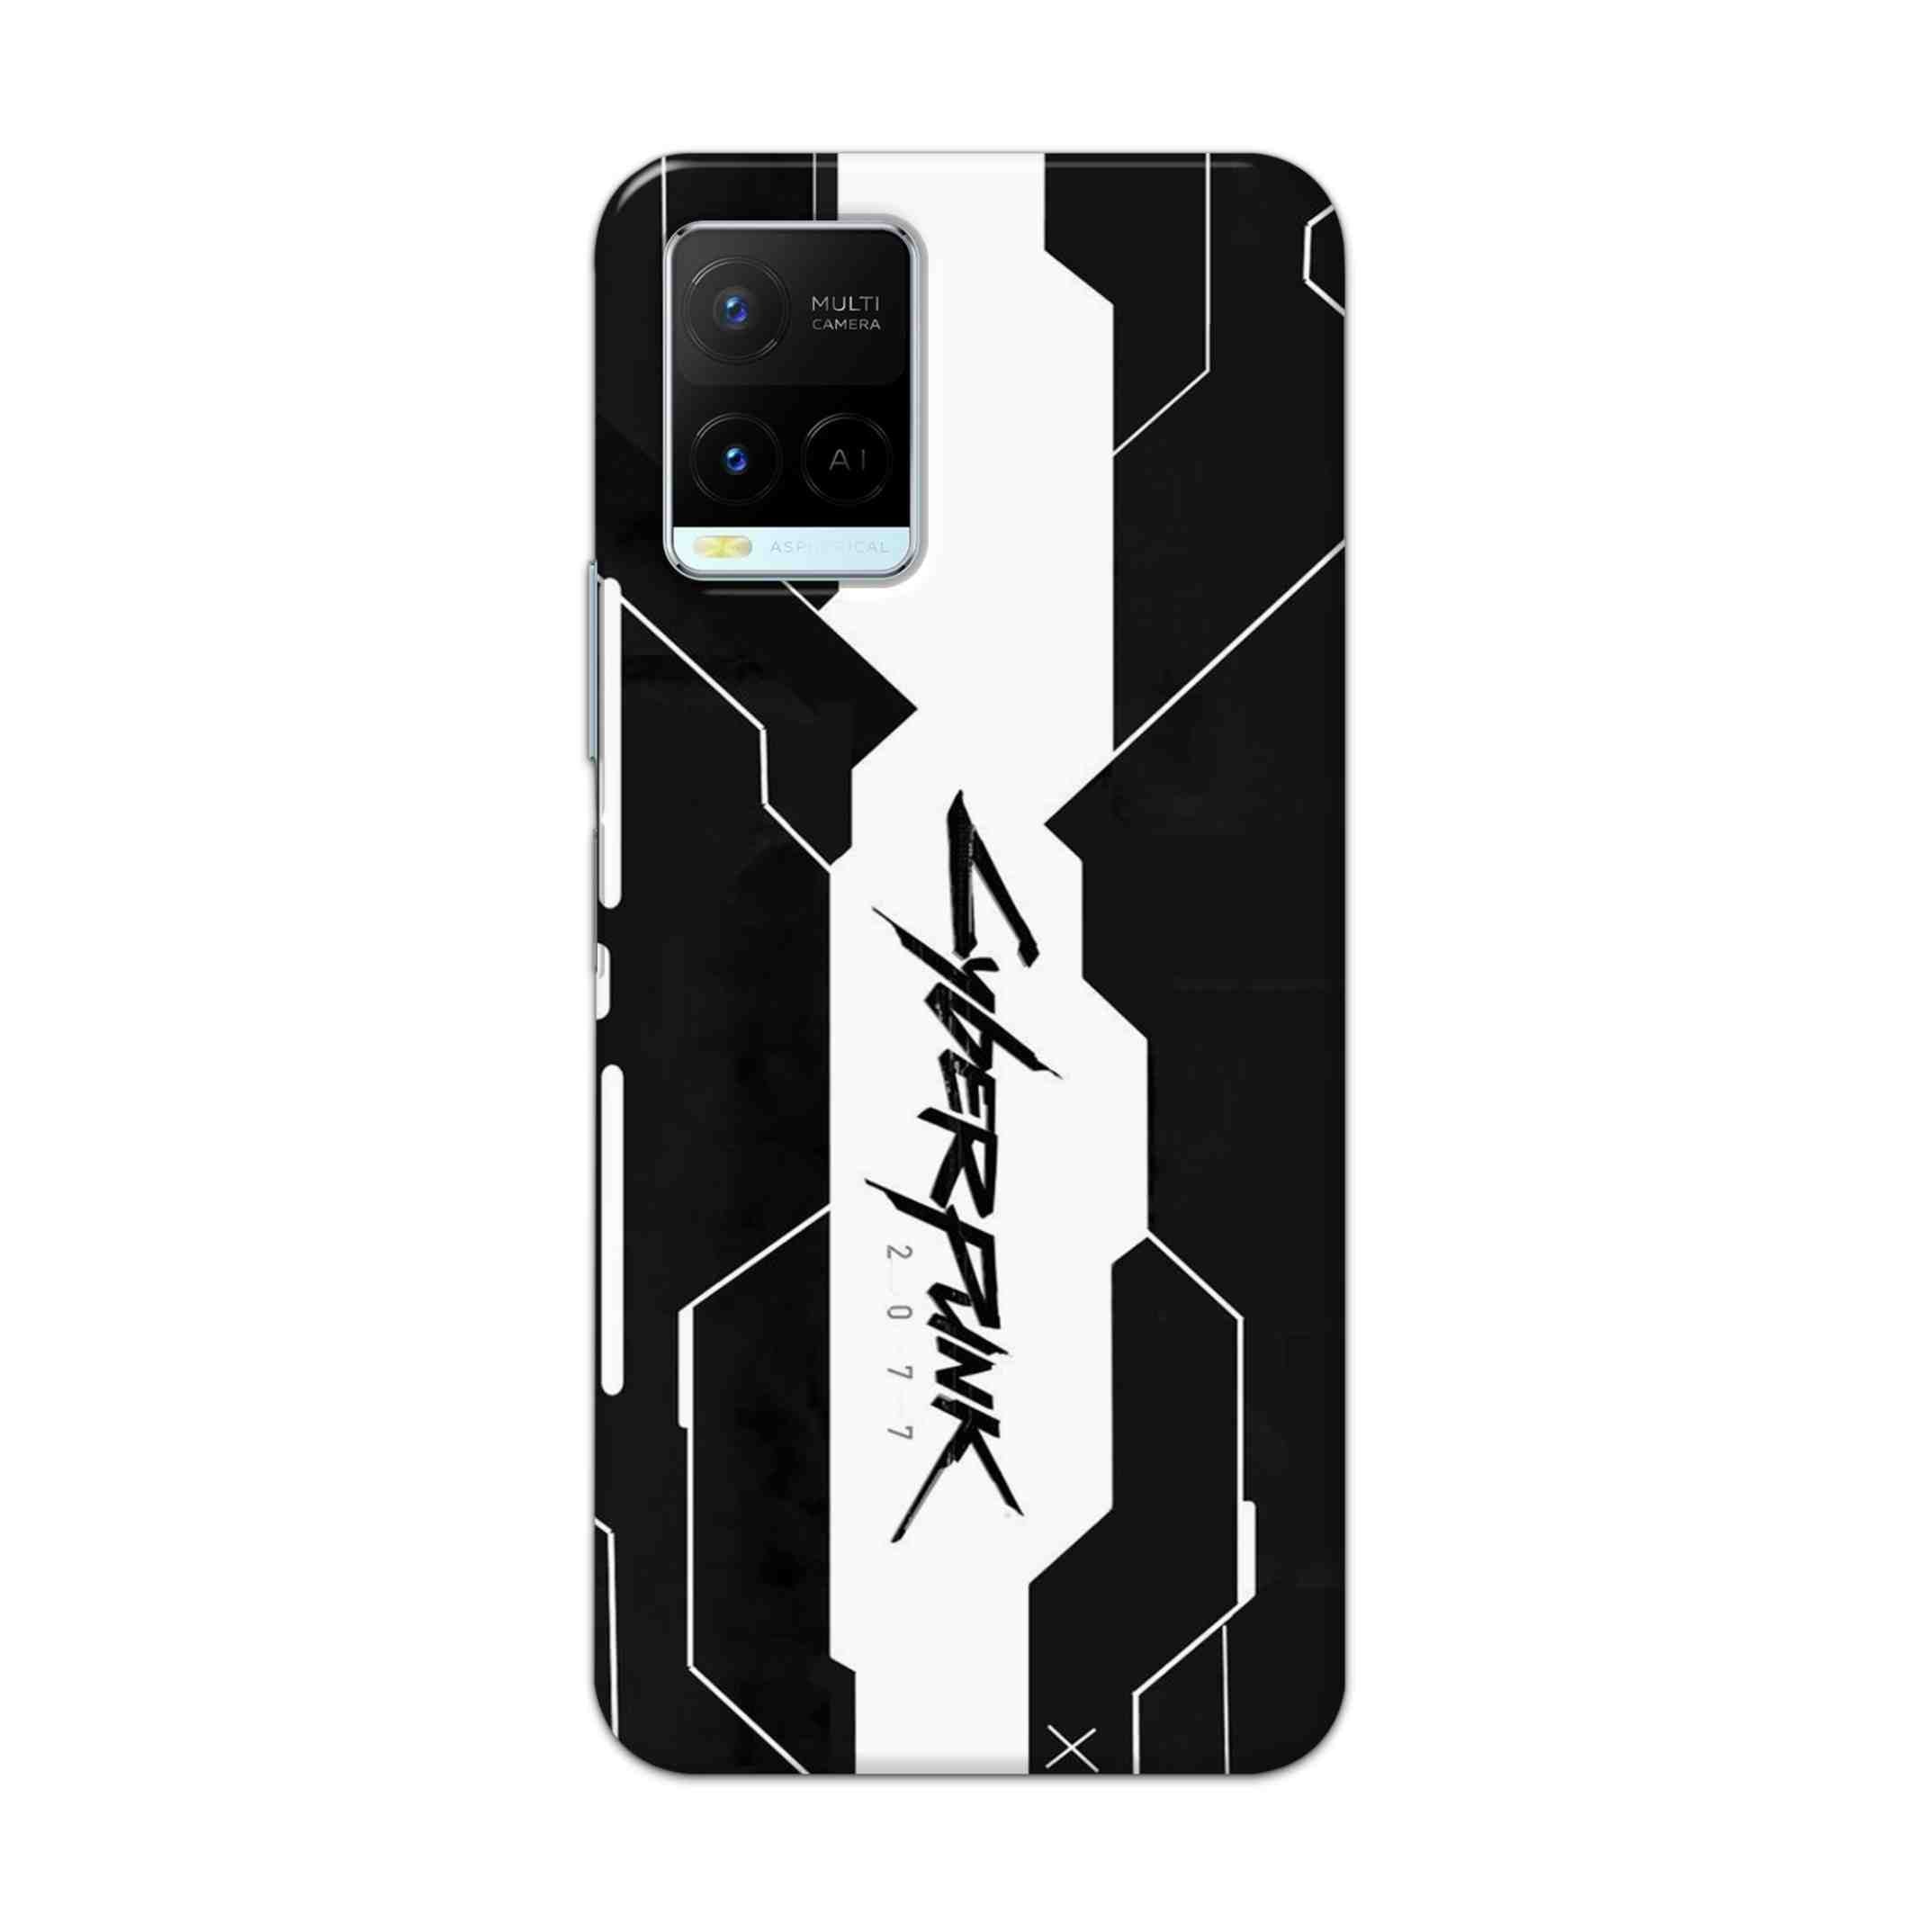 Buy Cyberpunk 2077 Art Hard Back Mobile Phone Case Cover For Vivo Y21 2021 Online